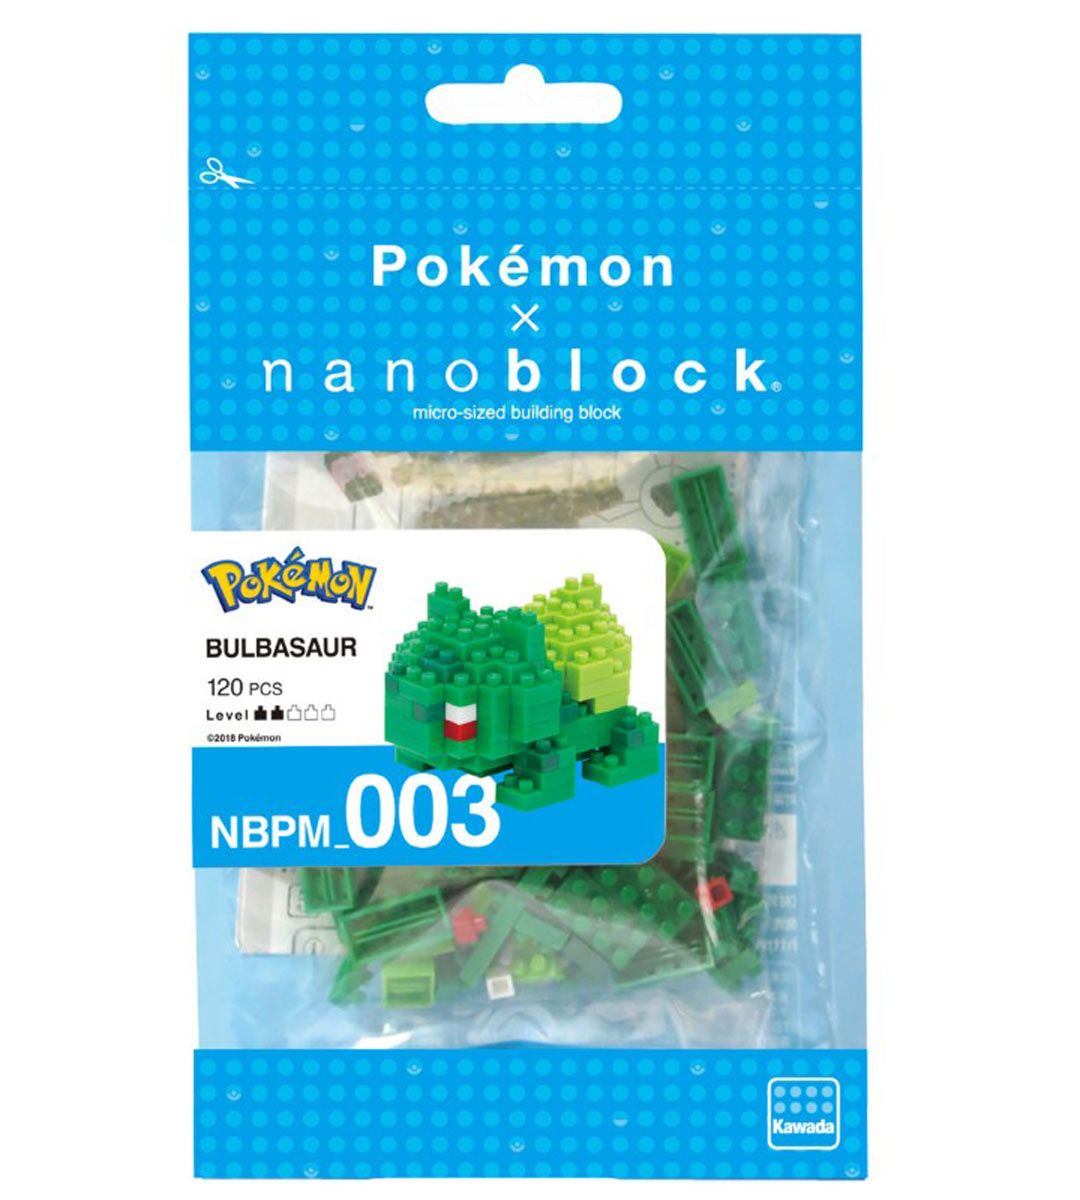 Pokémon x Nanoblock - Bulbasaur